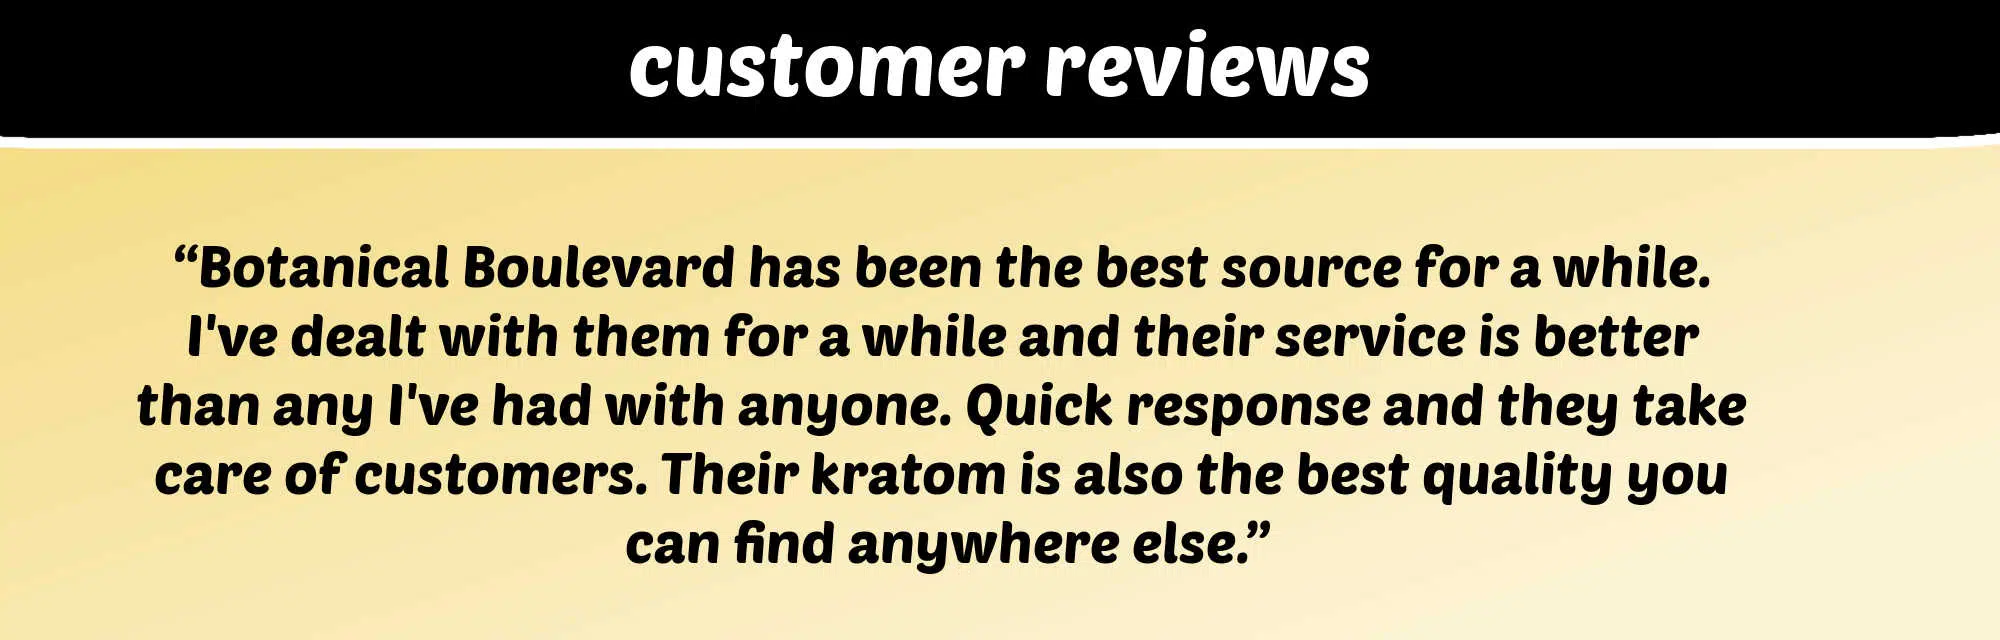 Sample of a Botanical Boulevard customer reviews